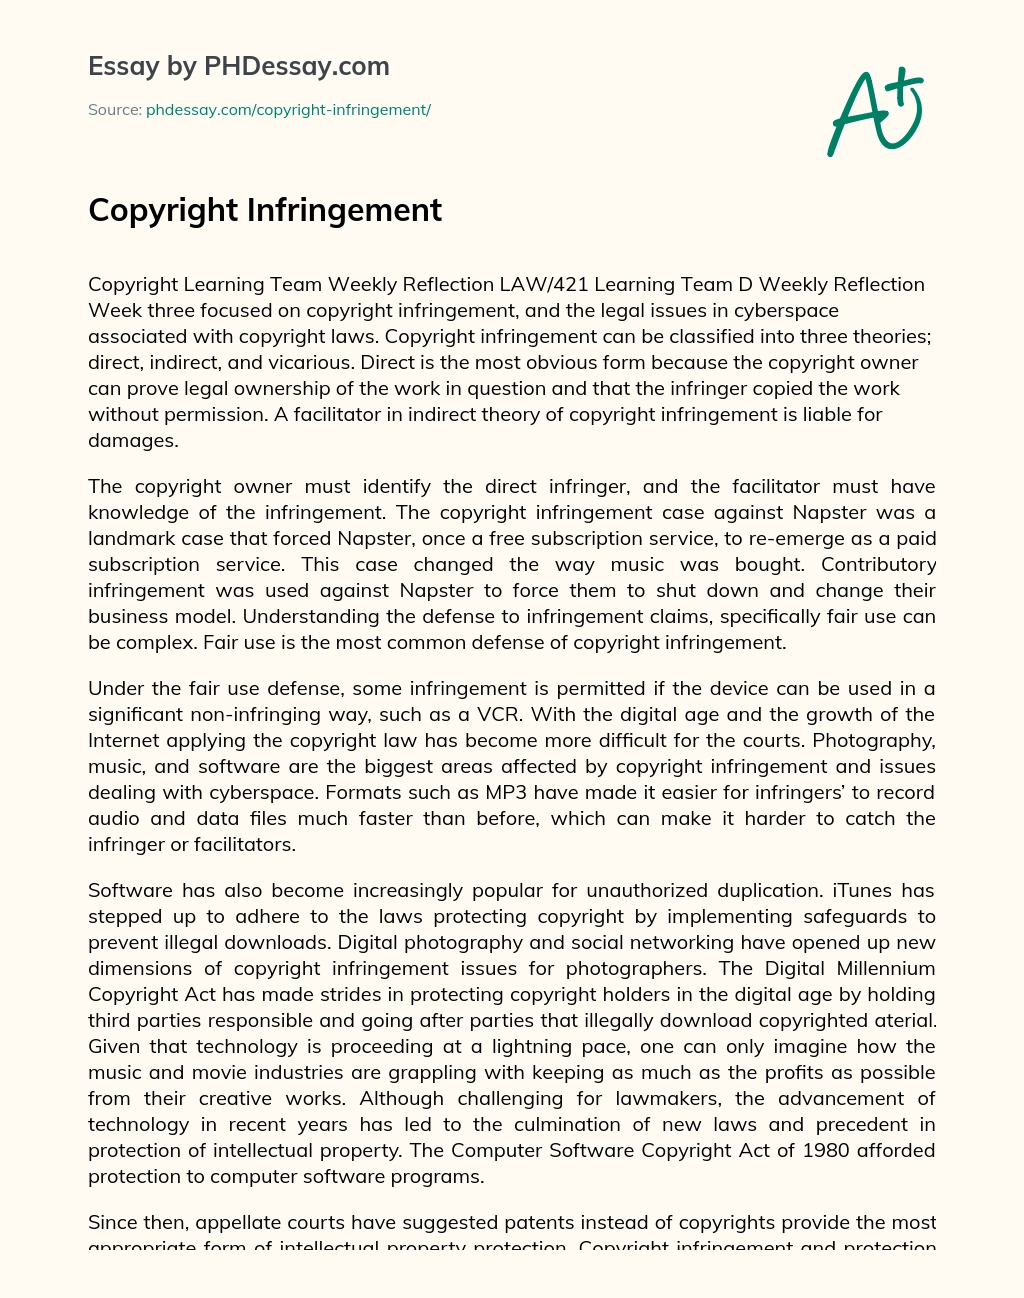 Copyright Infringement essay